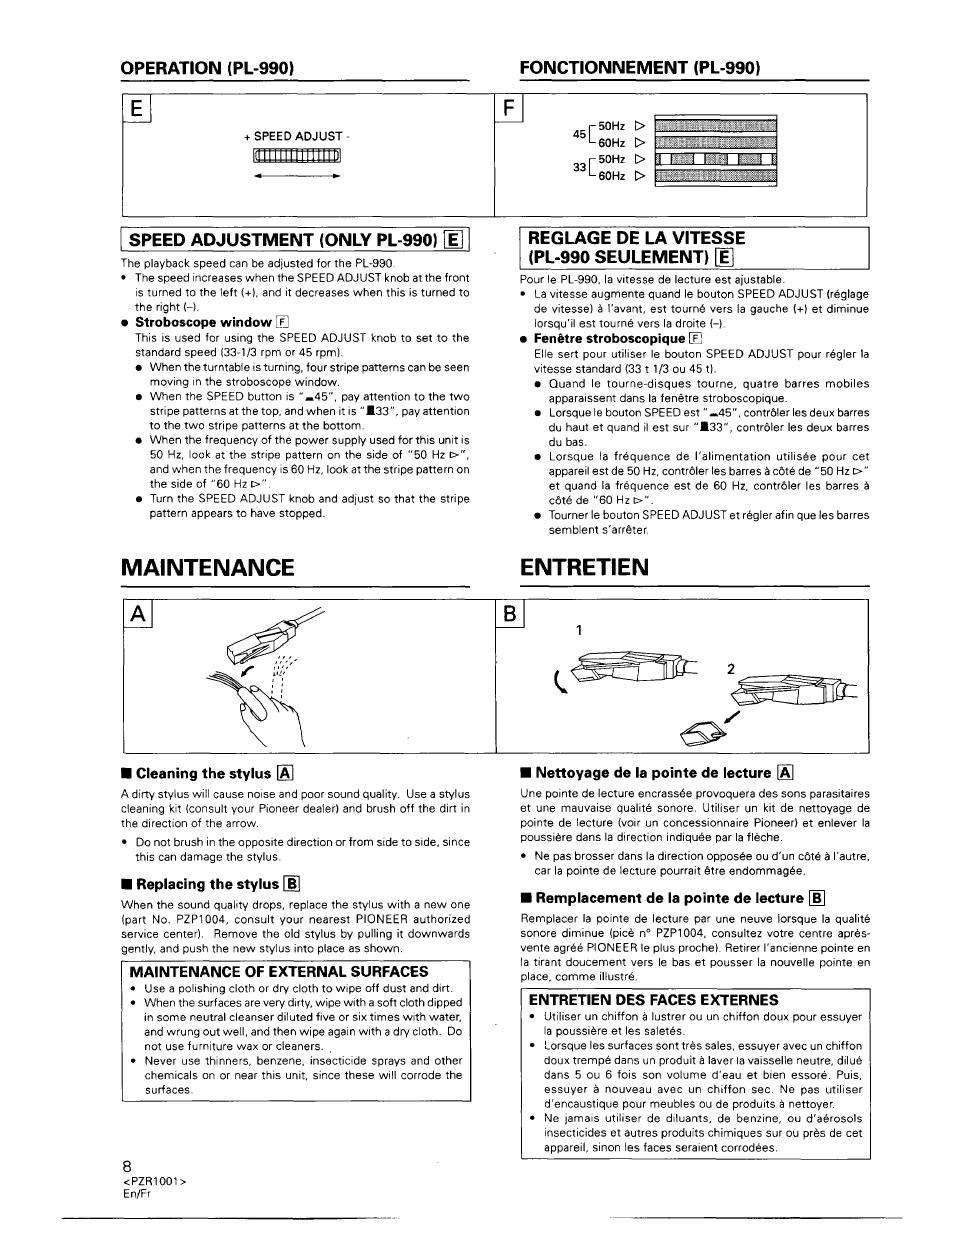 Fonctionnement (pl-990), Speed adjustment (only pl-990) [e, Stroboscope  window [f | Pioneer PL-990 User Manual | Page 8 / 26 | Original mode